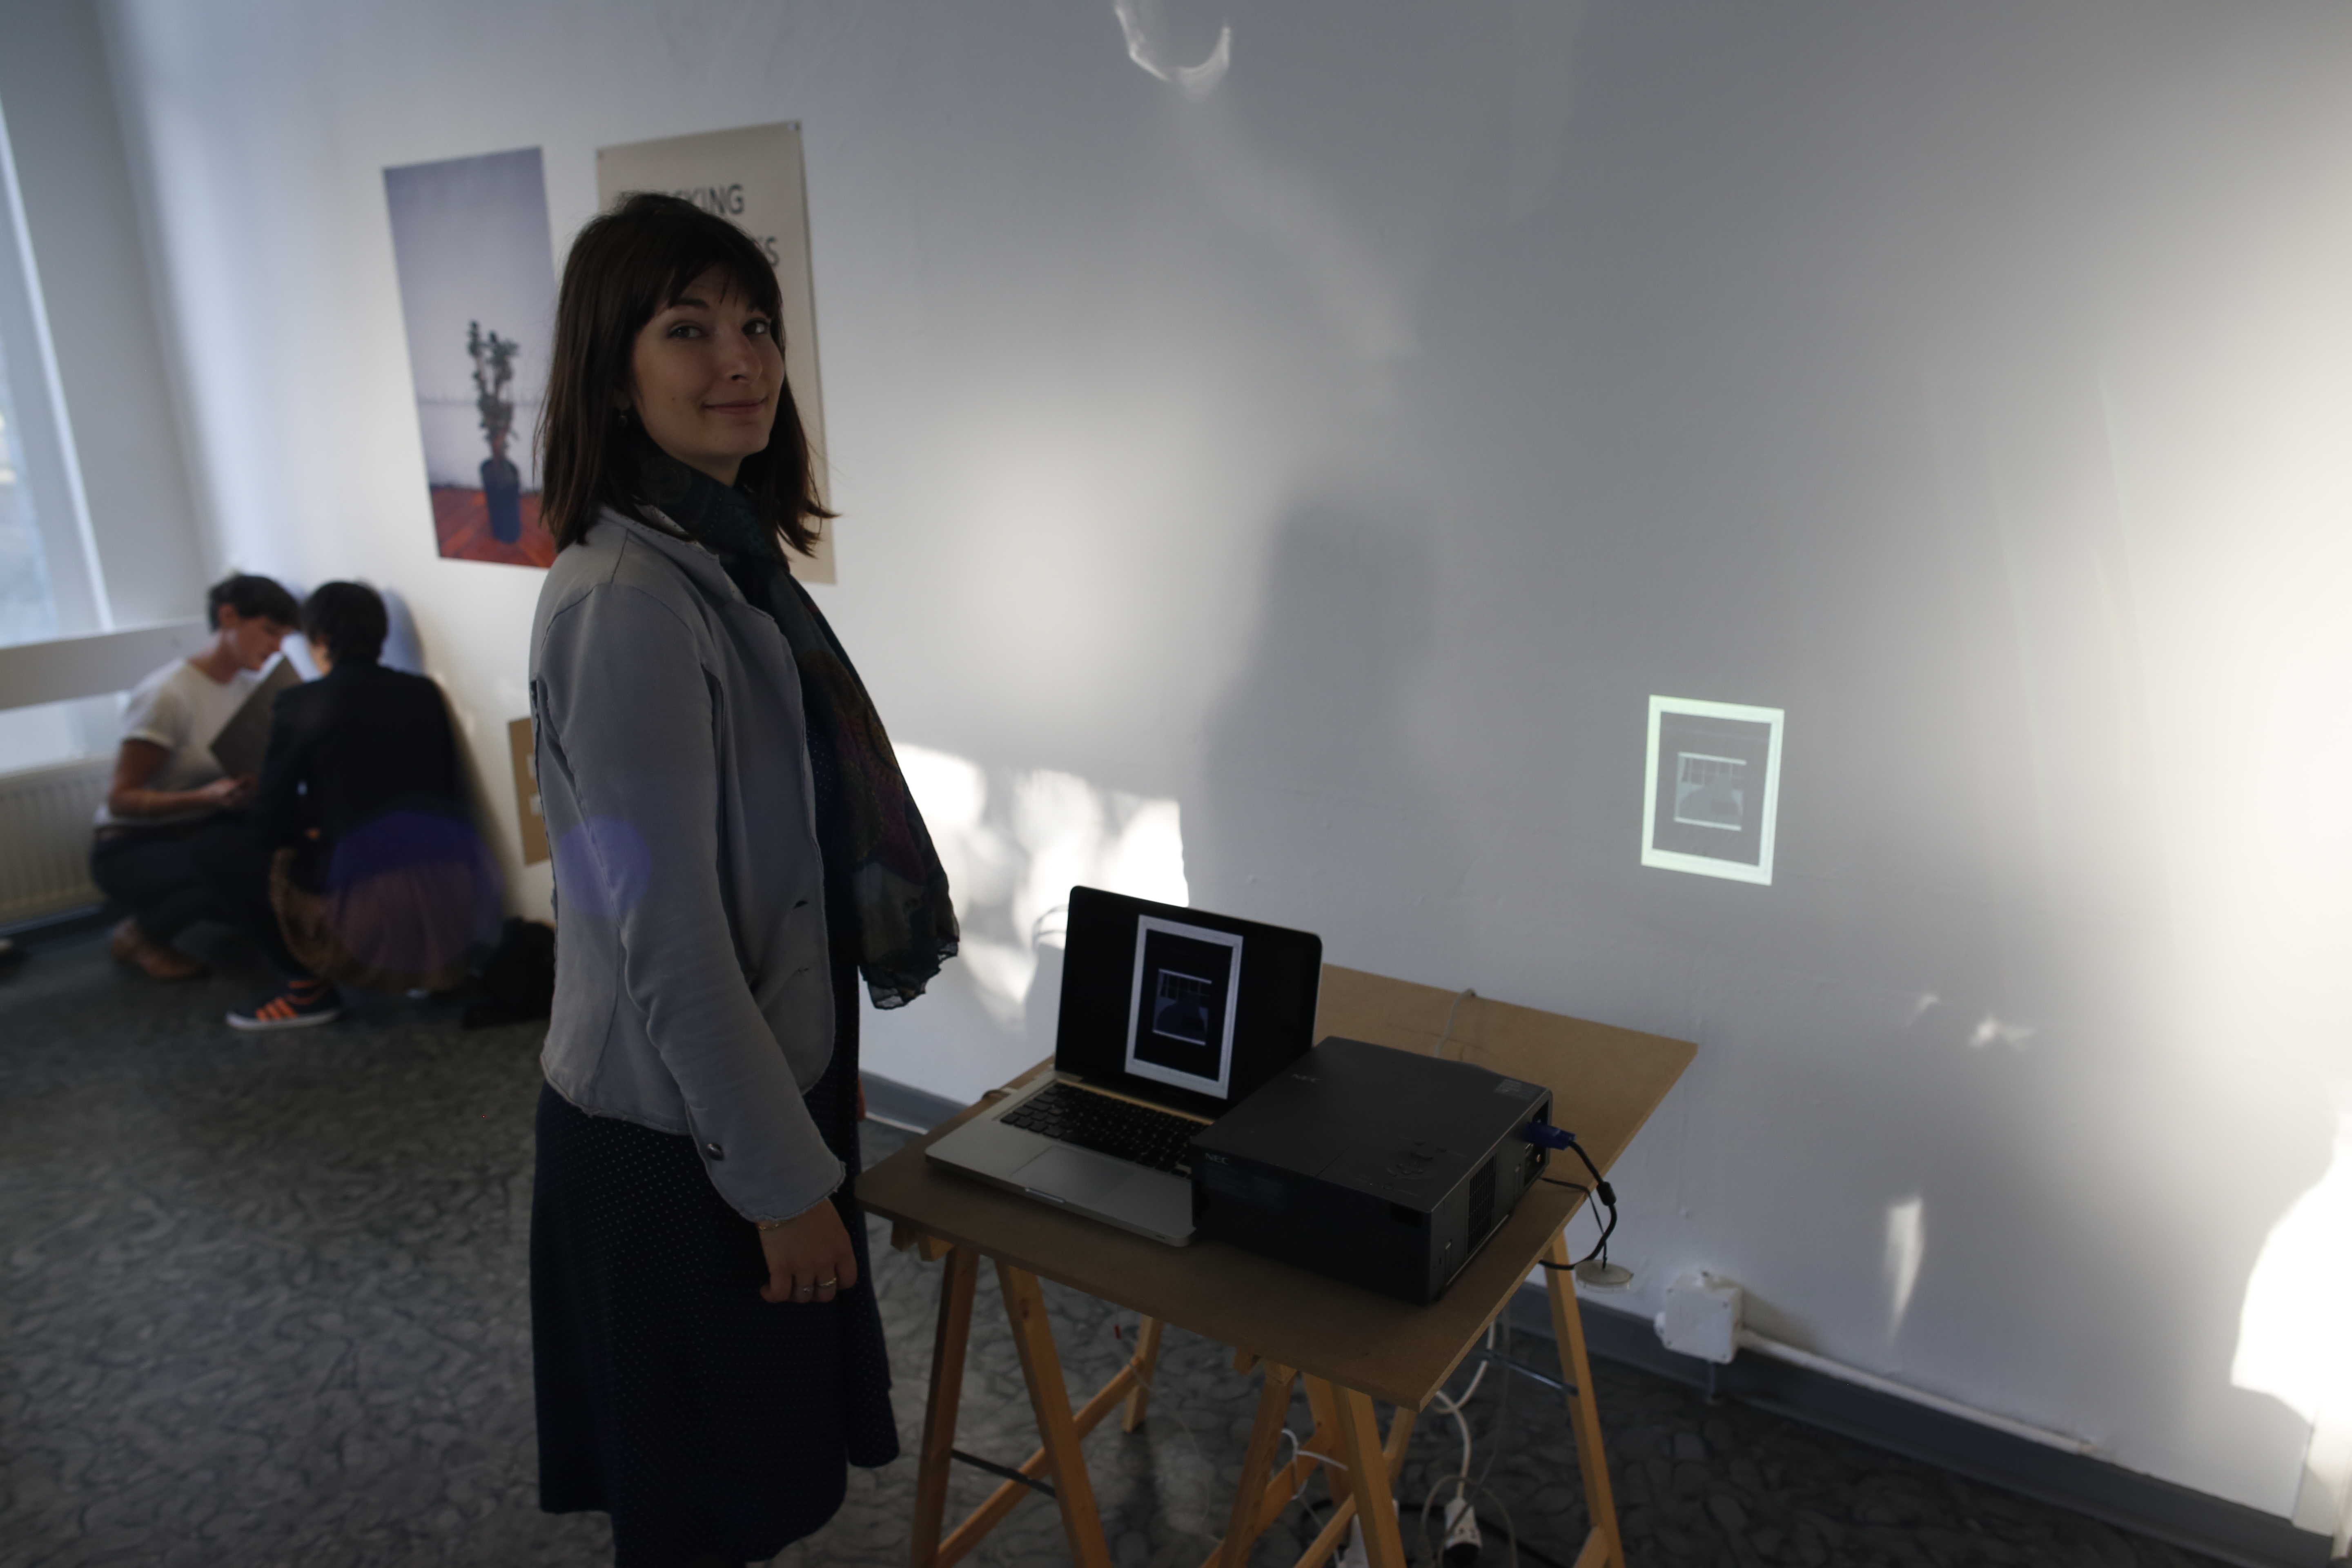 Maria Barlasov and her installation at Upominki